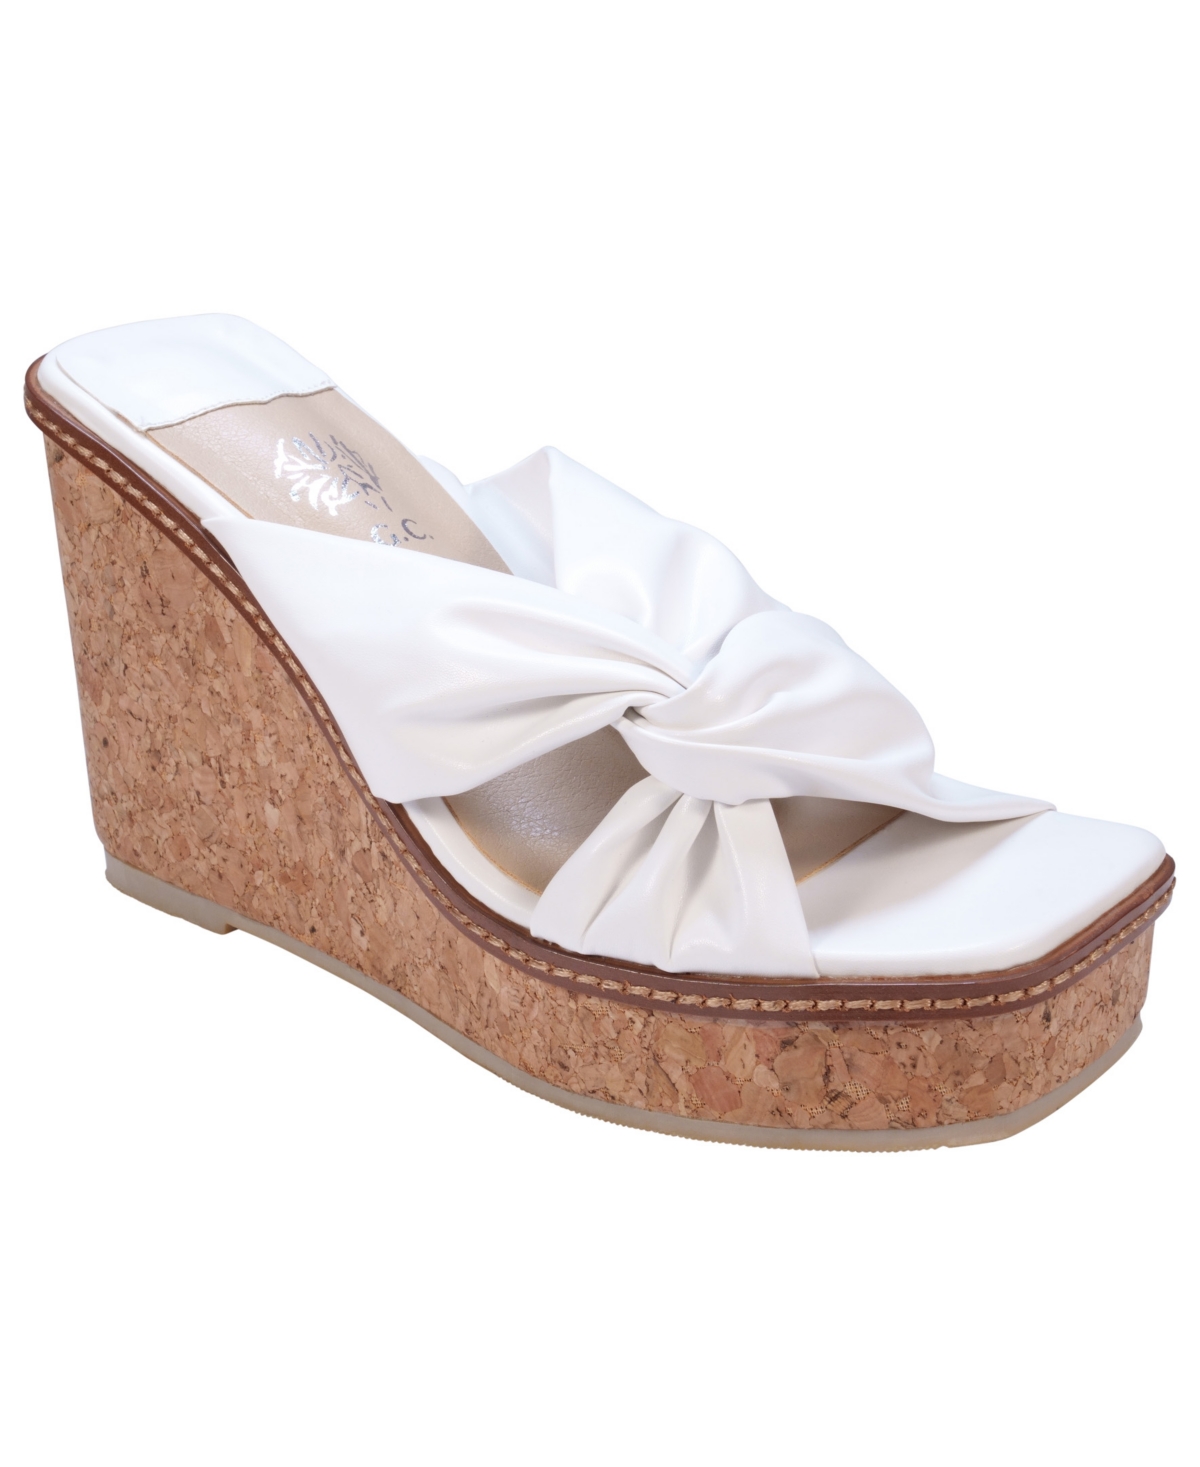 Women's Neila Strappy Wedge Sandals - White